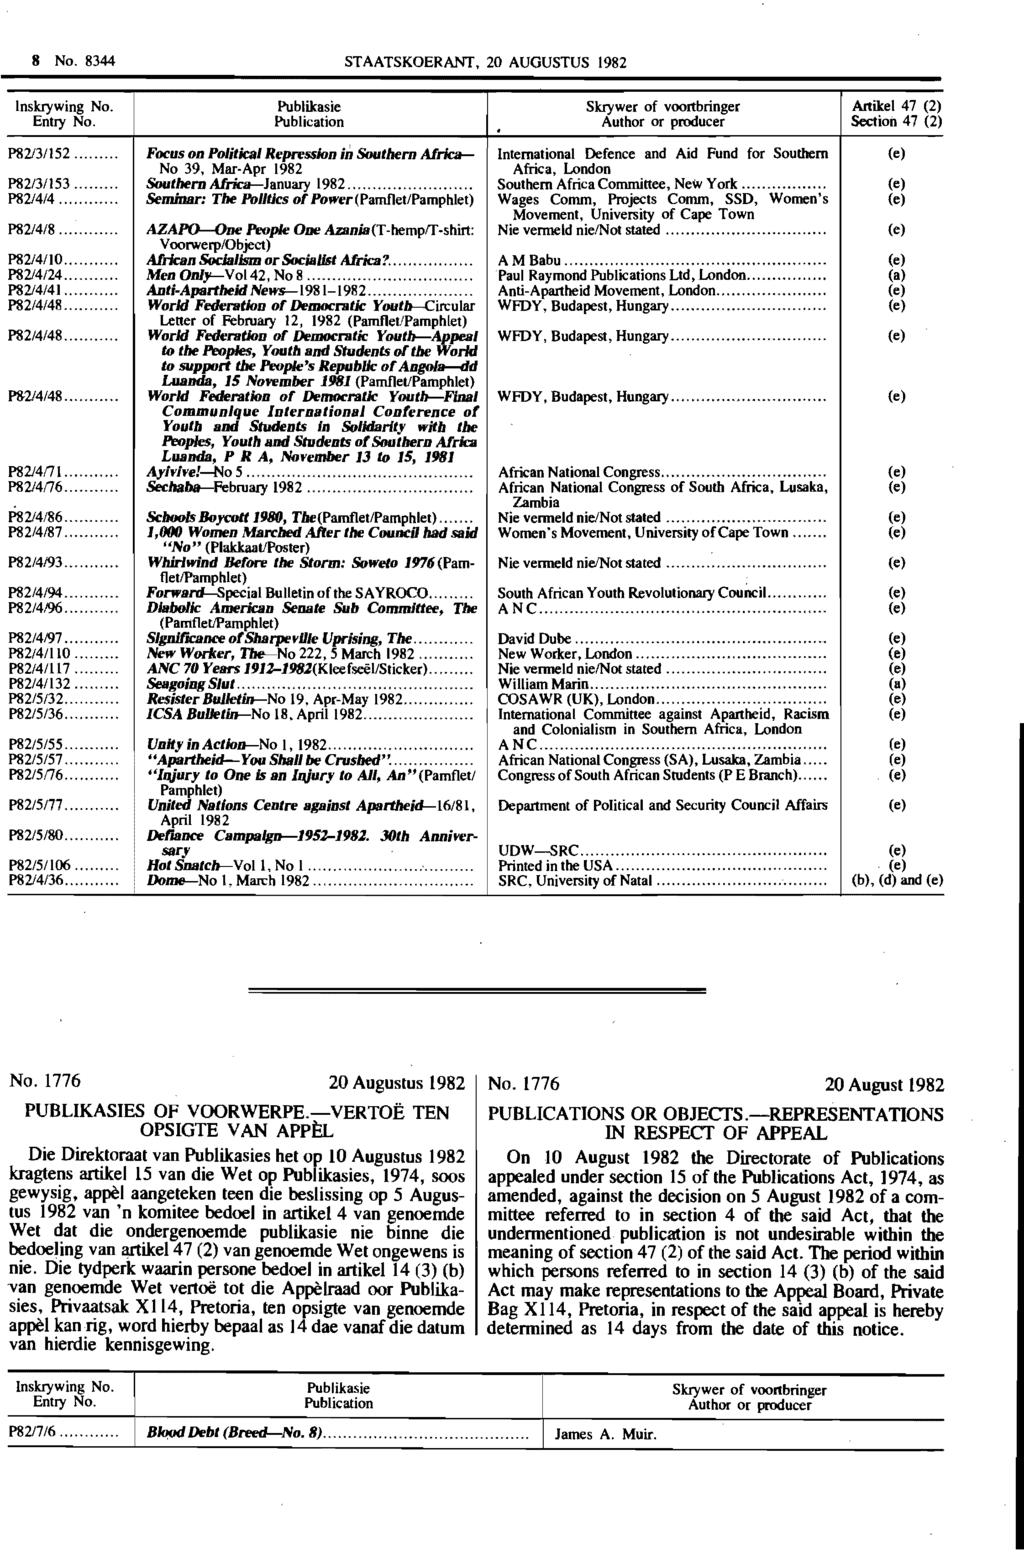 8 No. 8344 STAATSKOERANT, 20 AUGUSTUS 1982 Inskrywing No. Entry No. Publikasie Publication Skrywer of voortbringer Author or producer Artikel 47 (2) Section 47 (2) P8213/152.